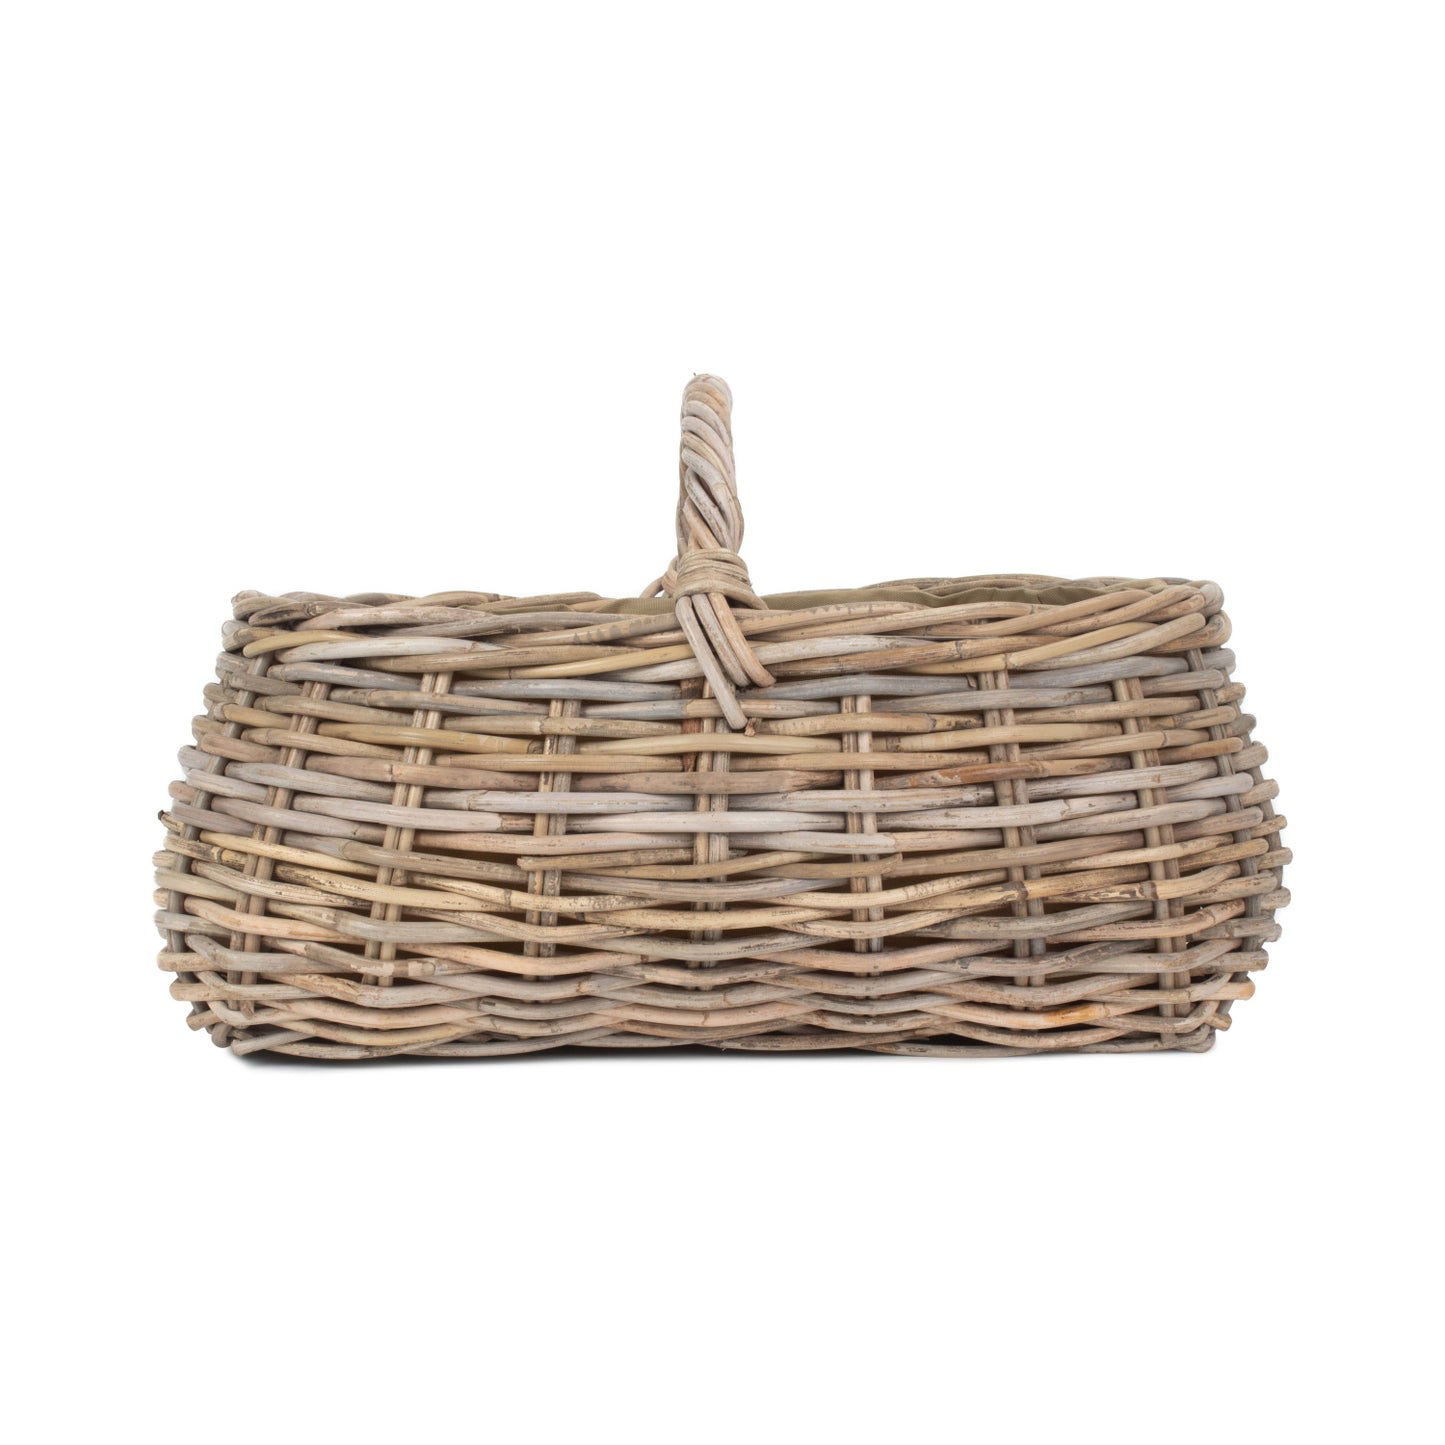 Grey Rattan Market Basket - Cordura Lining